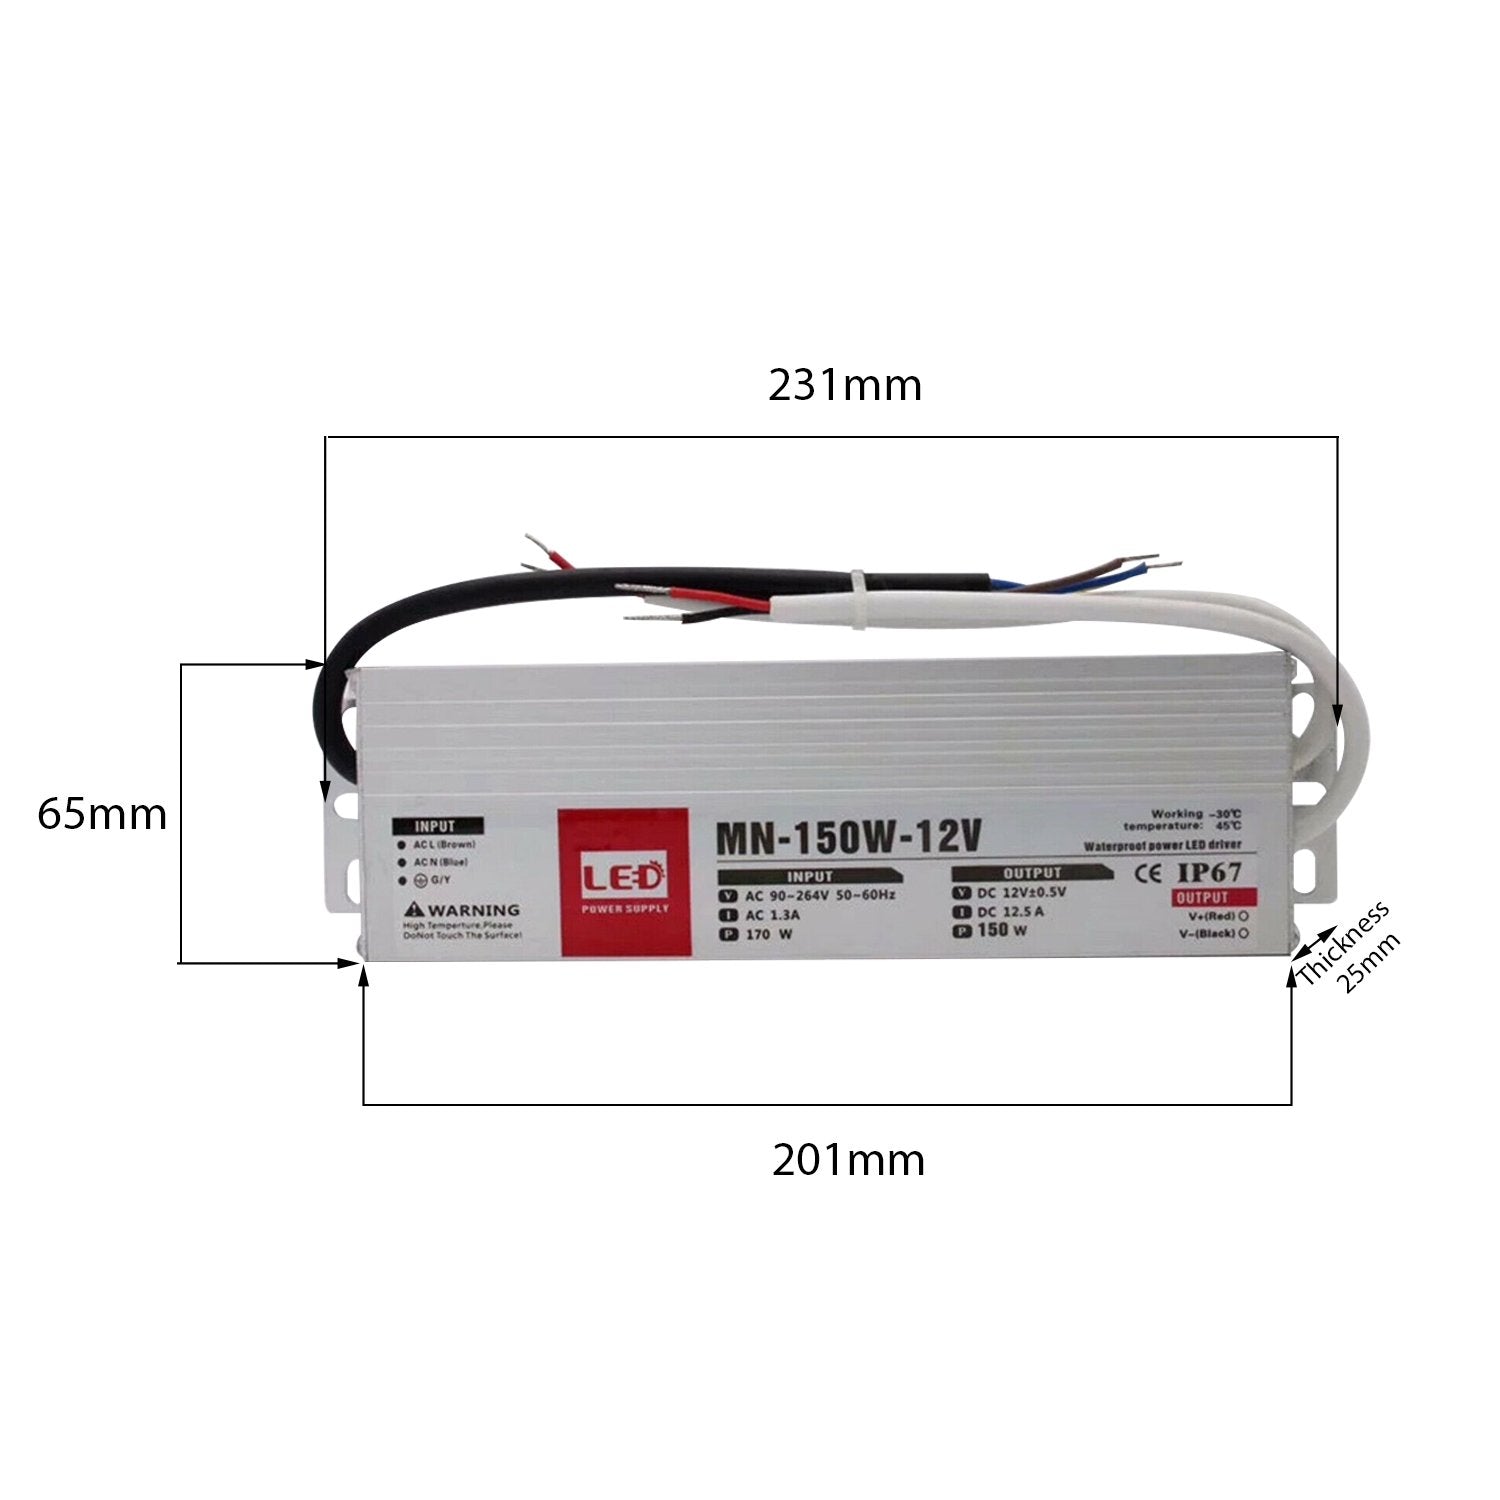 150W LED driver switch power supply transformer IP67 Ultra Slim~2100 - LEDSone UK Ltd